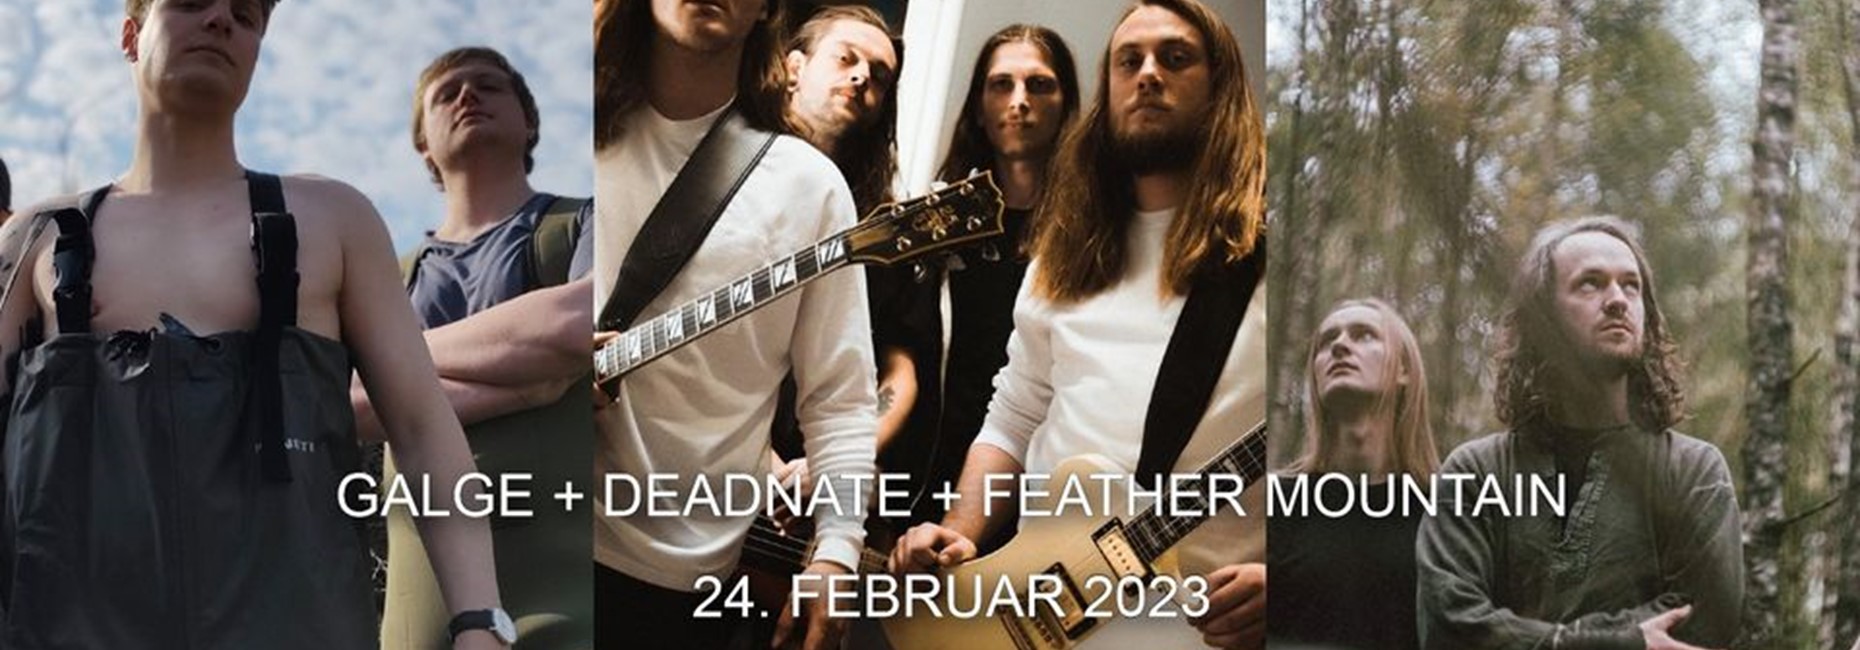 Deadnate / Feather Mountain / Galge på Ungdommens Hus